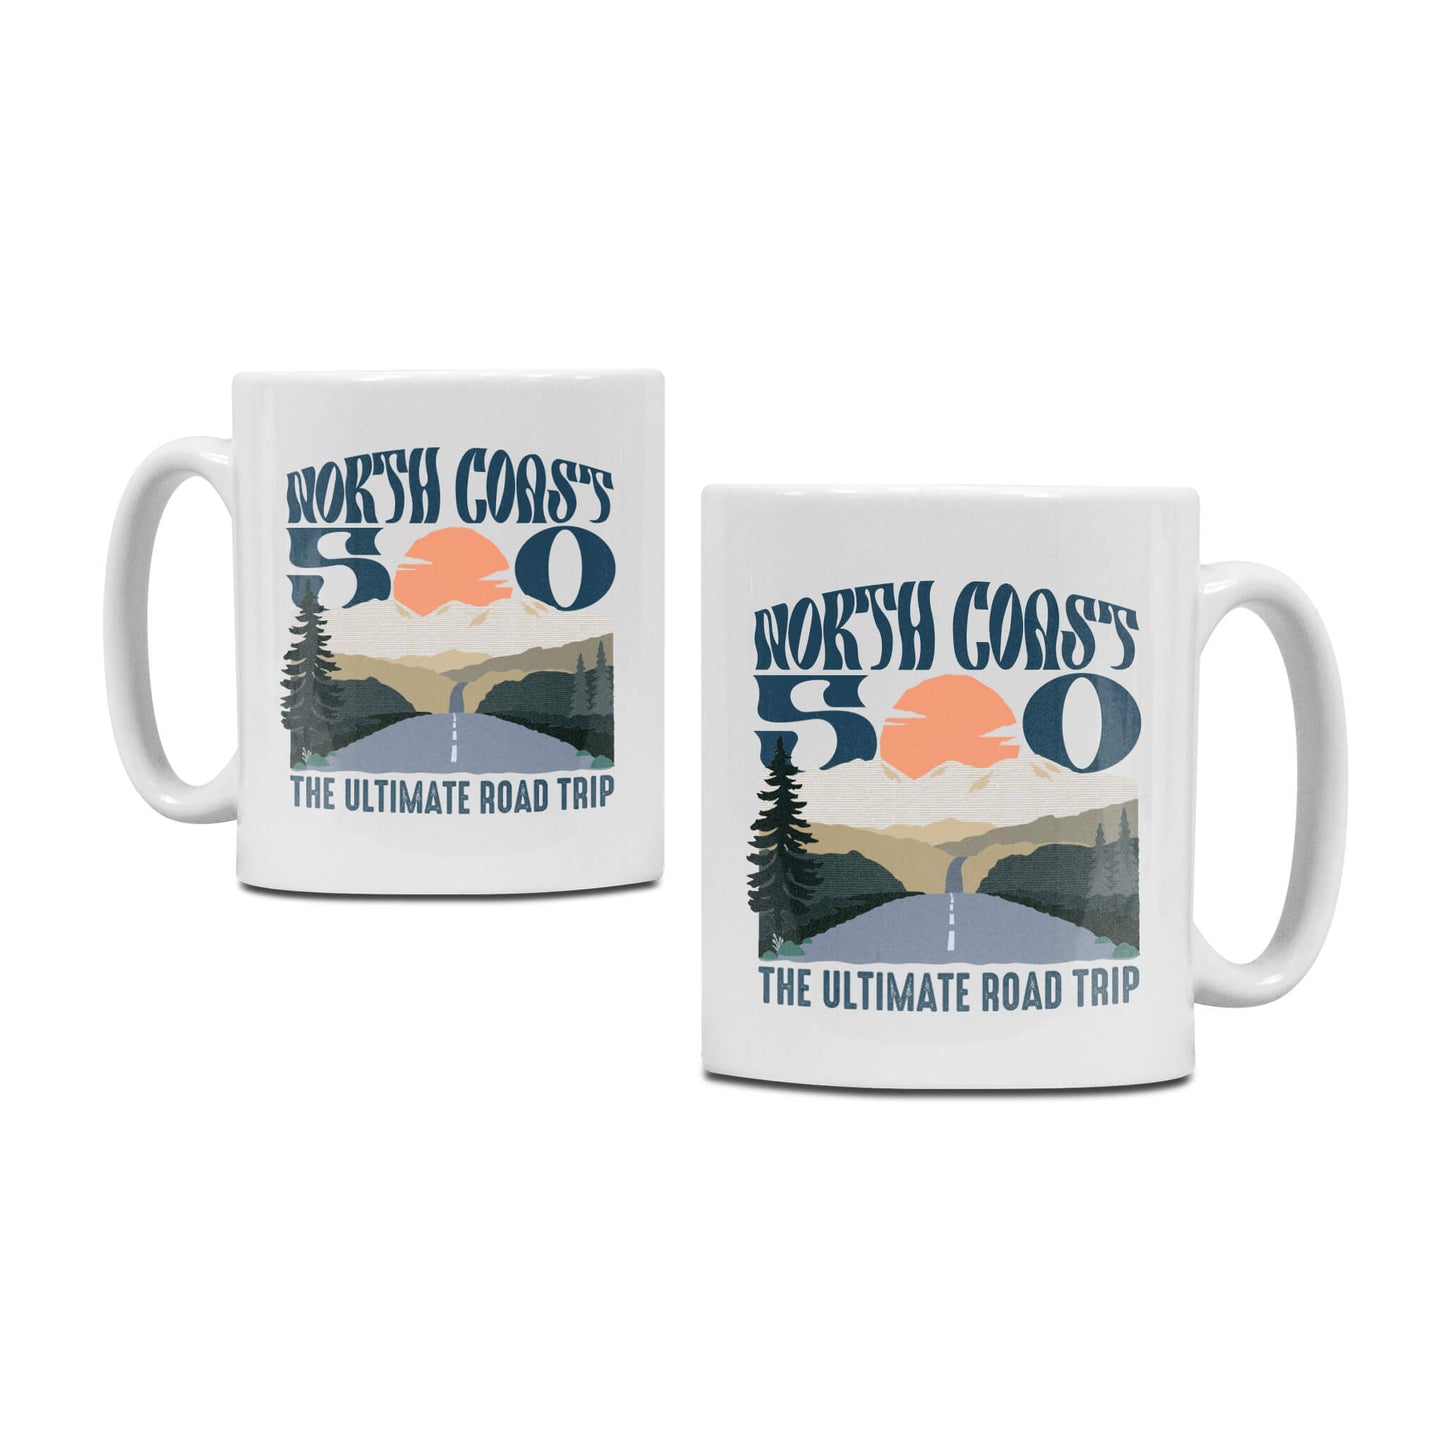 Into The Sunset Ceramic Mug - White - North Coast 500